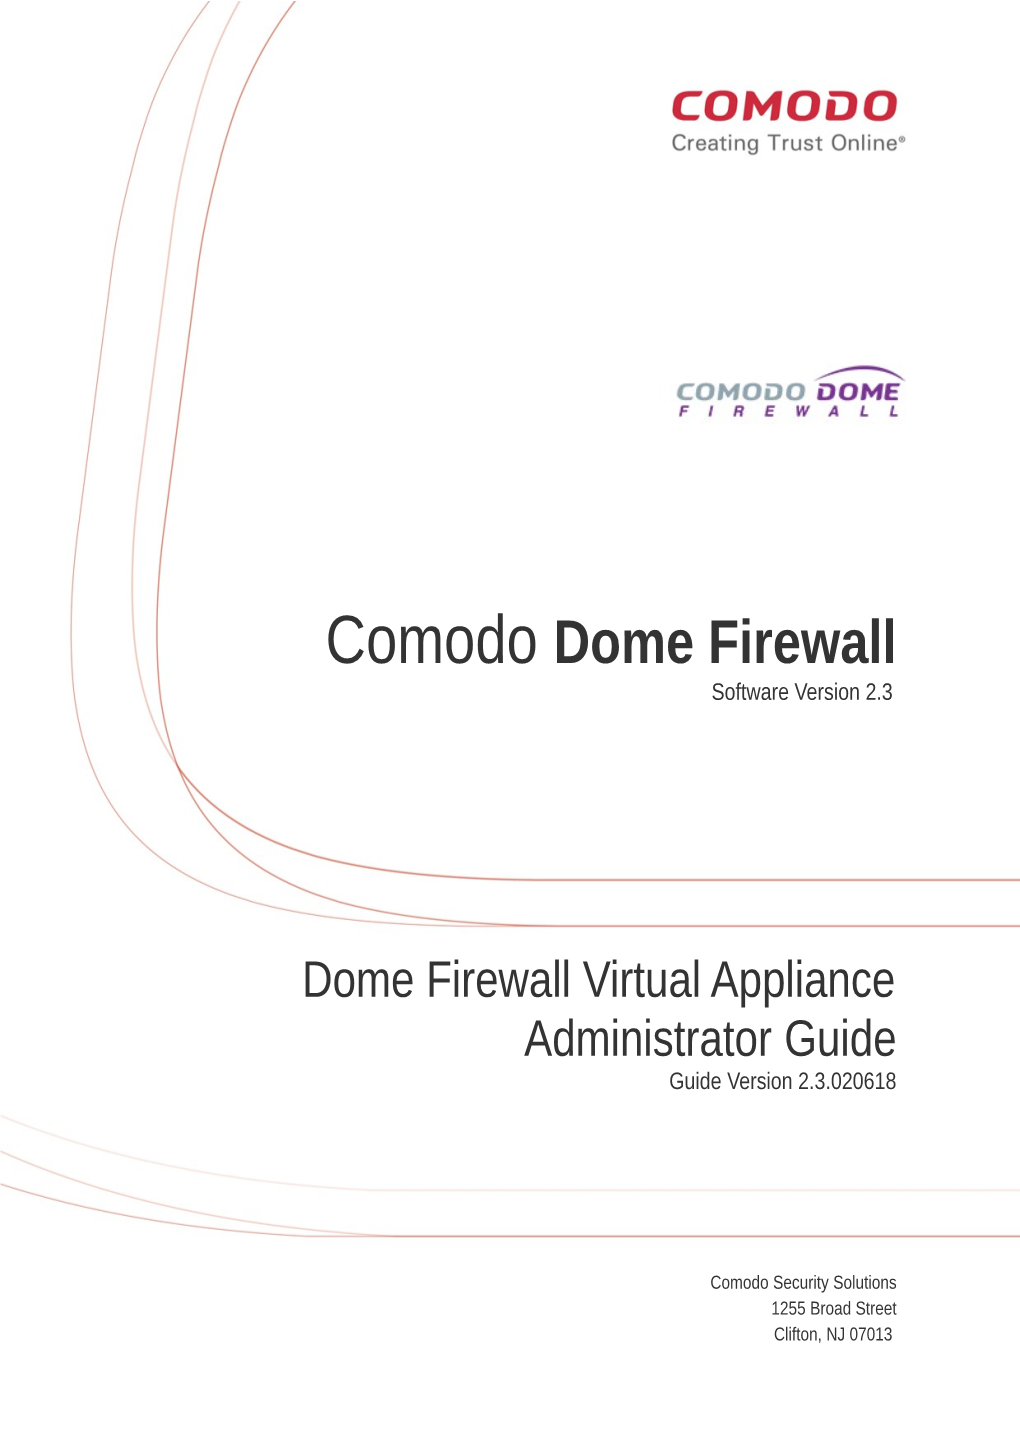 Comodo Dome Firewall Virtual Appliance - Administrator Guide